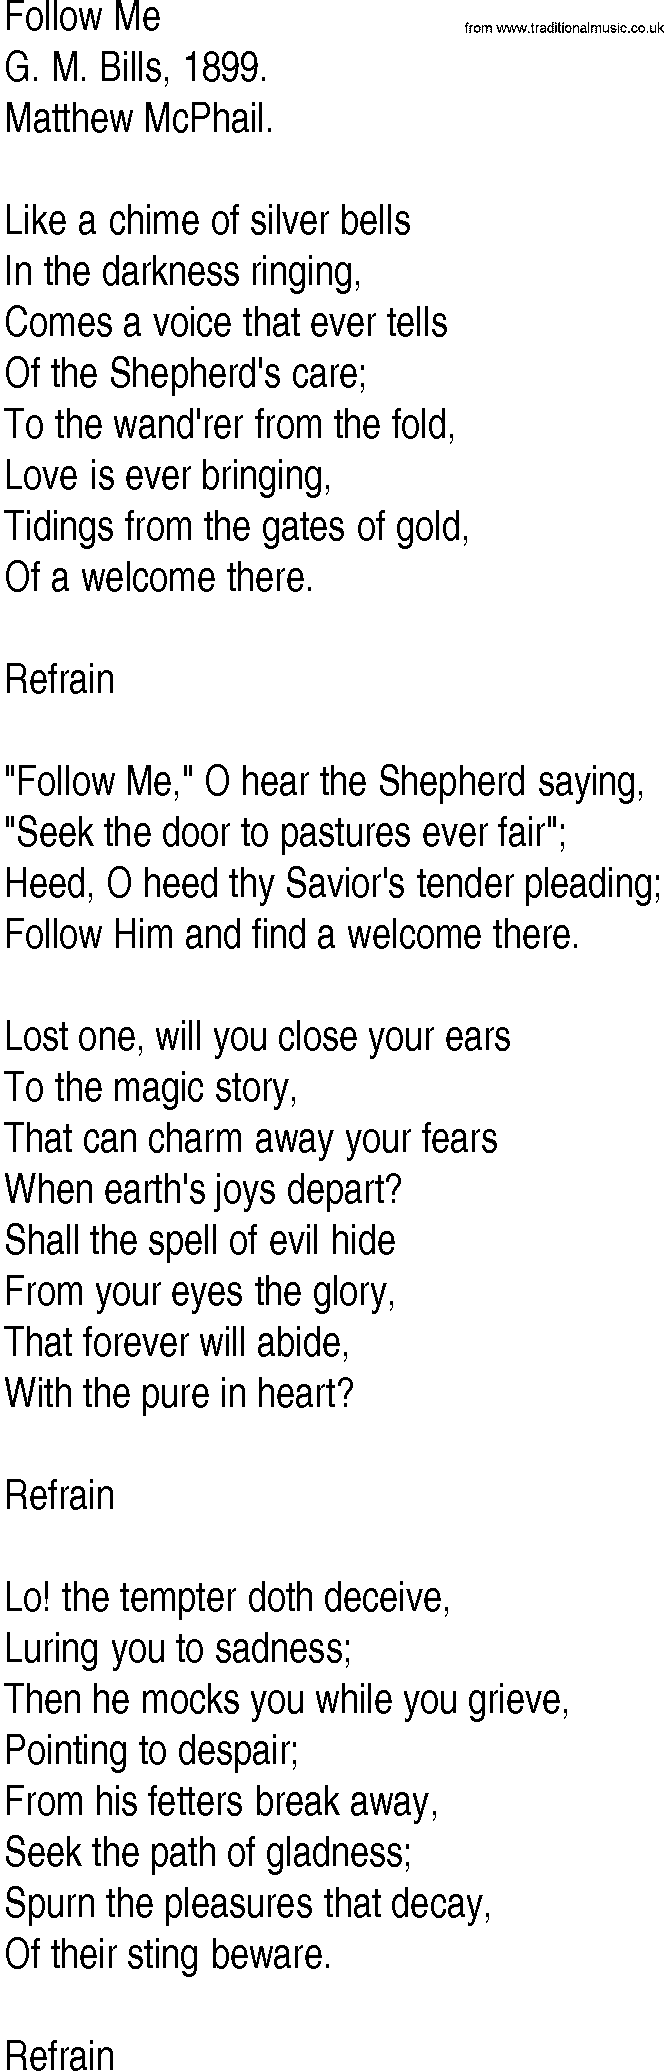 Hymn and Gospel Song: Follow Me by G M Bills lyrics